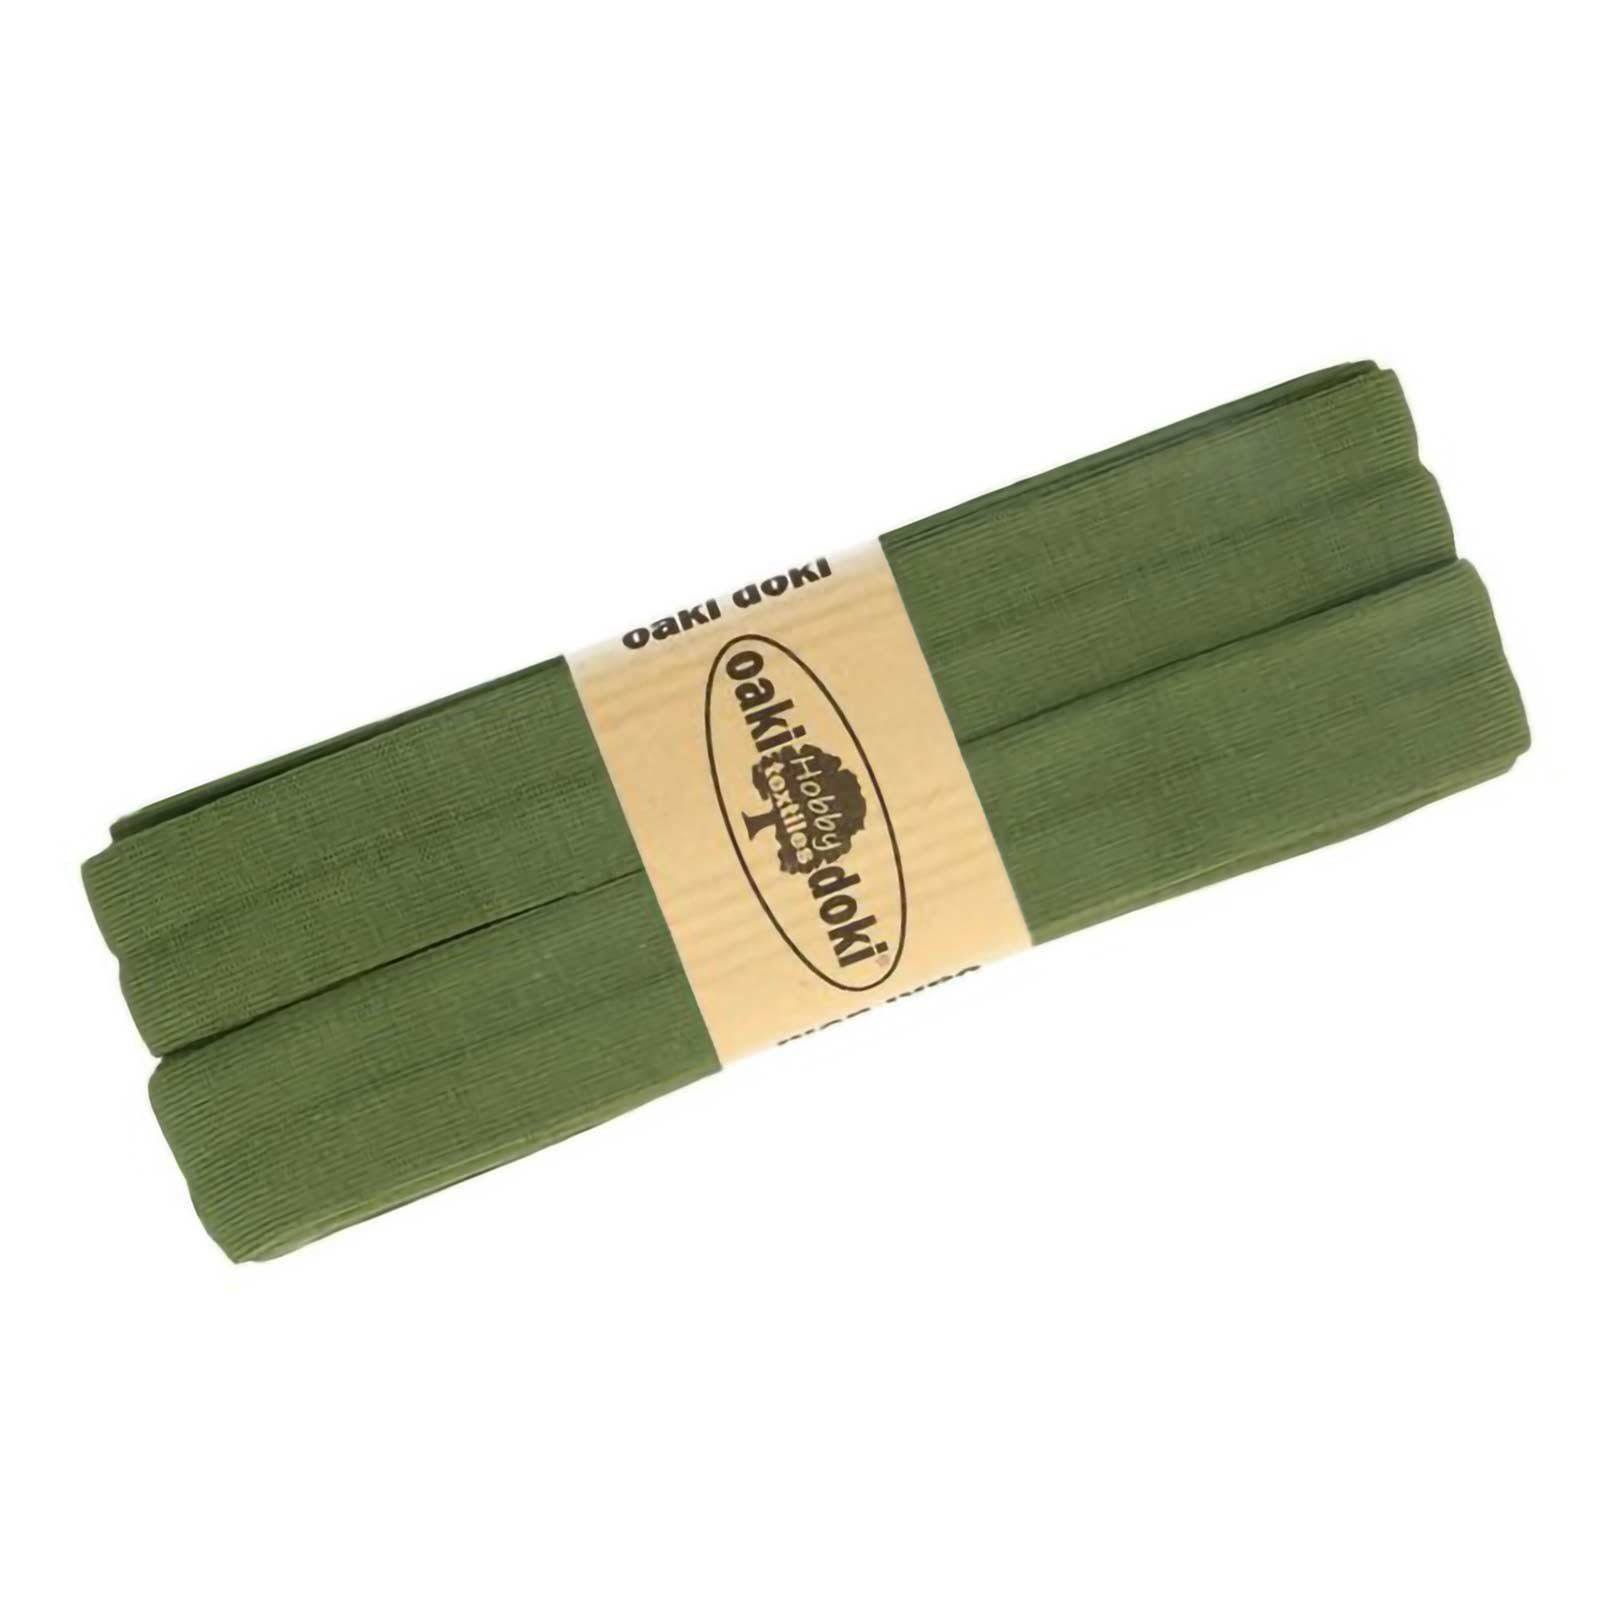 maDDma Stoff 3m Oaki Doki Tricot de Luxe Jersey-Schrägband, olivgrün